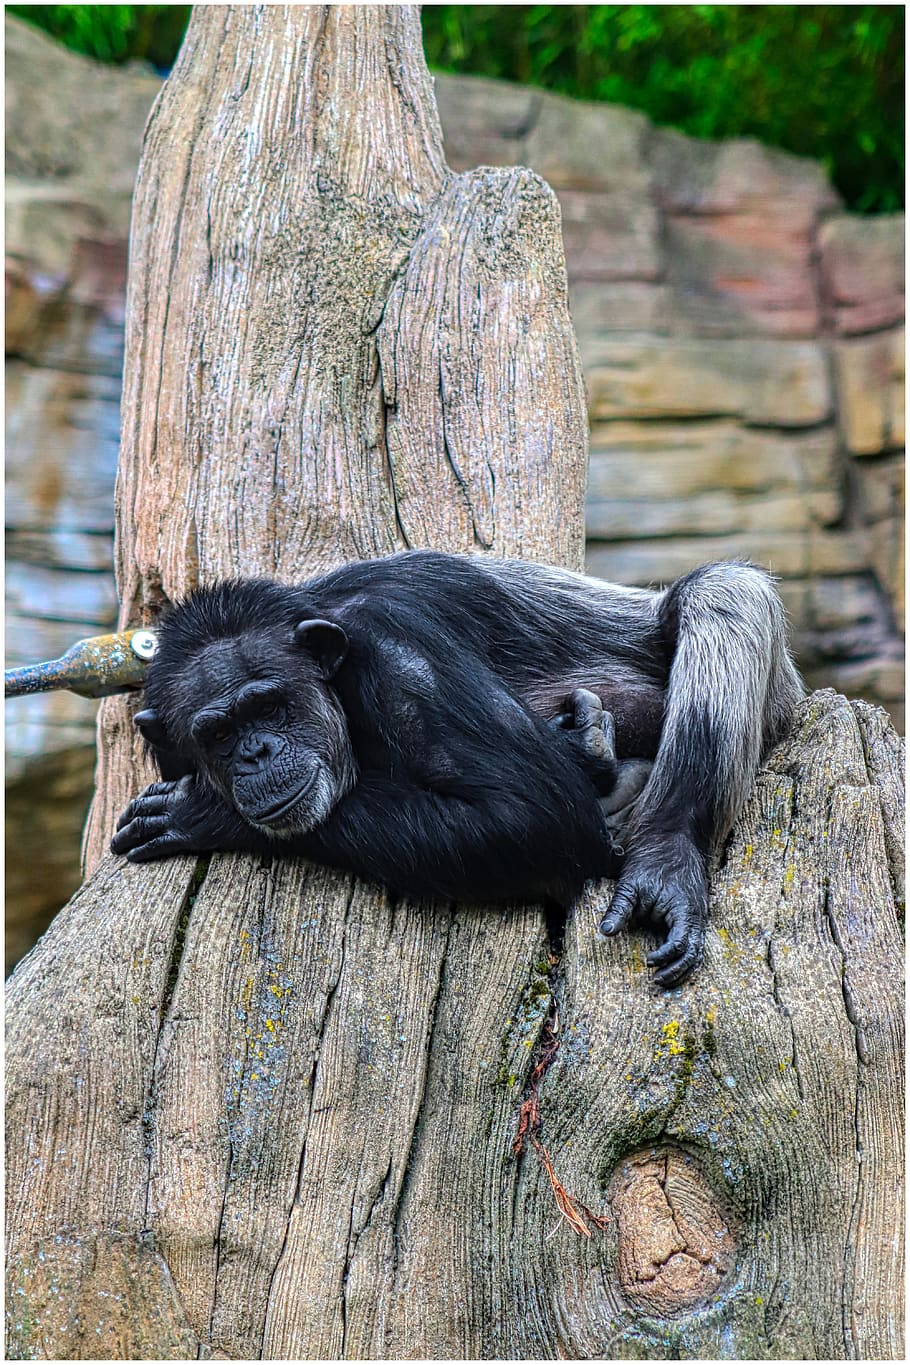 chimpanzee, monkey, log, concerns, äffchen, zoo, wood, ape, primate, chill out